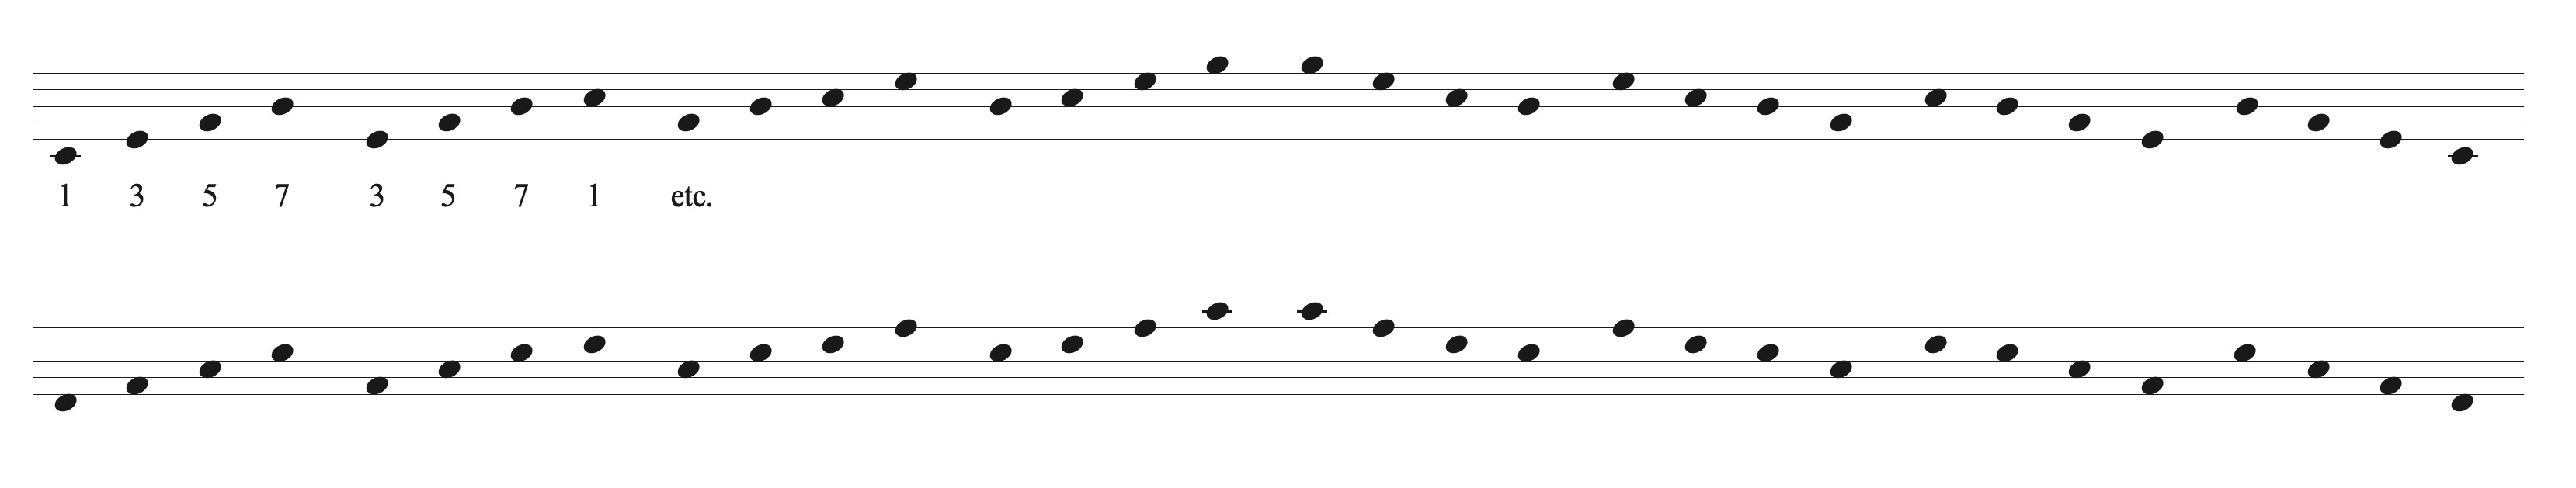 Seventh chord pattern 1